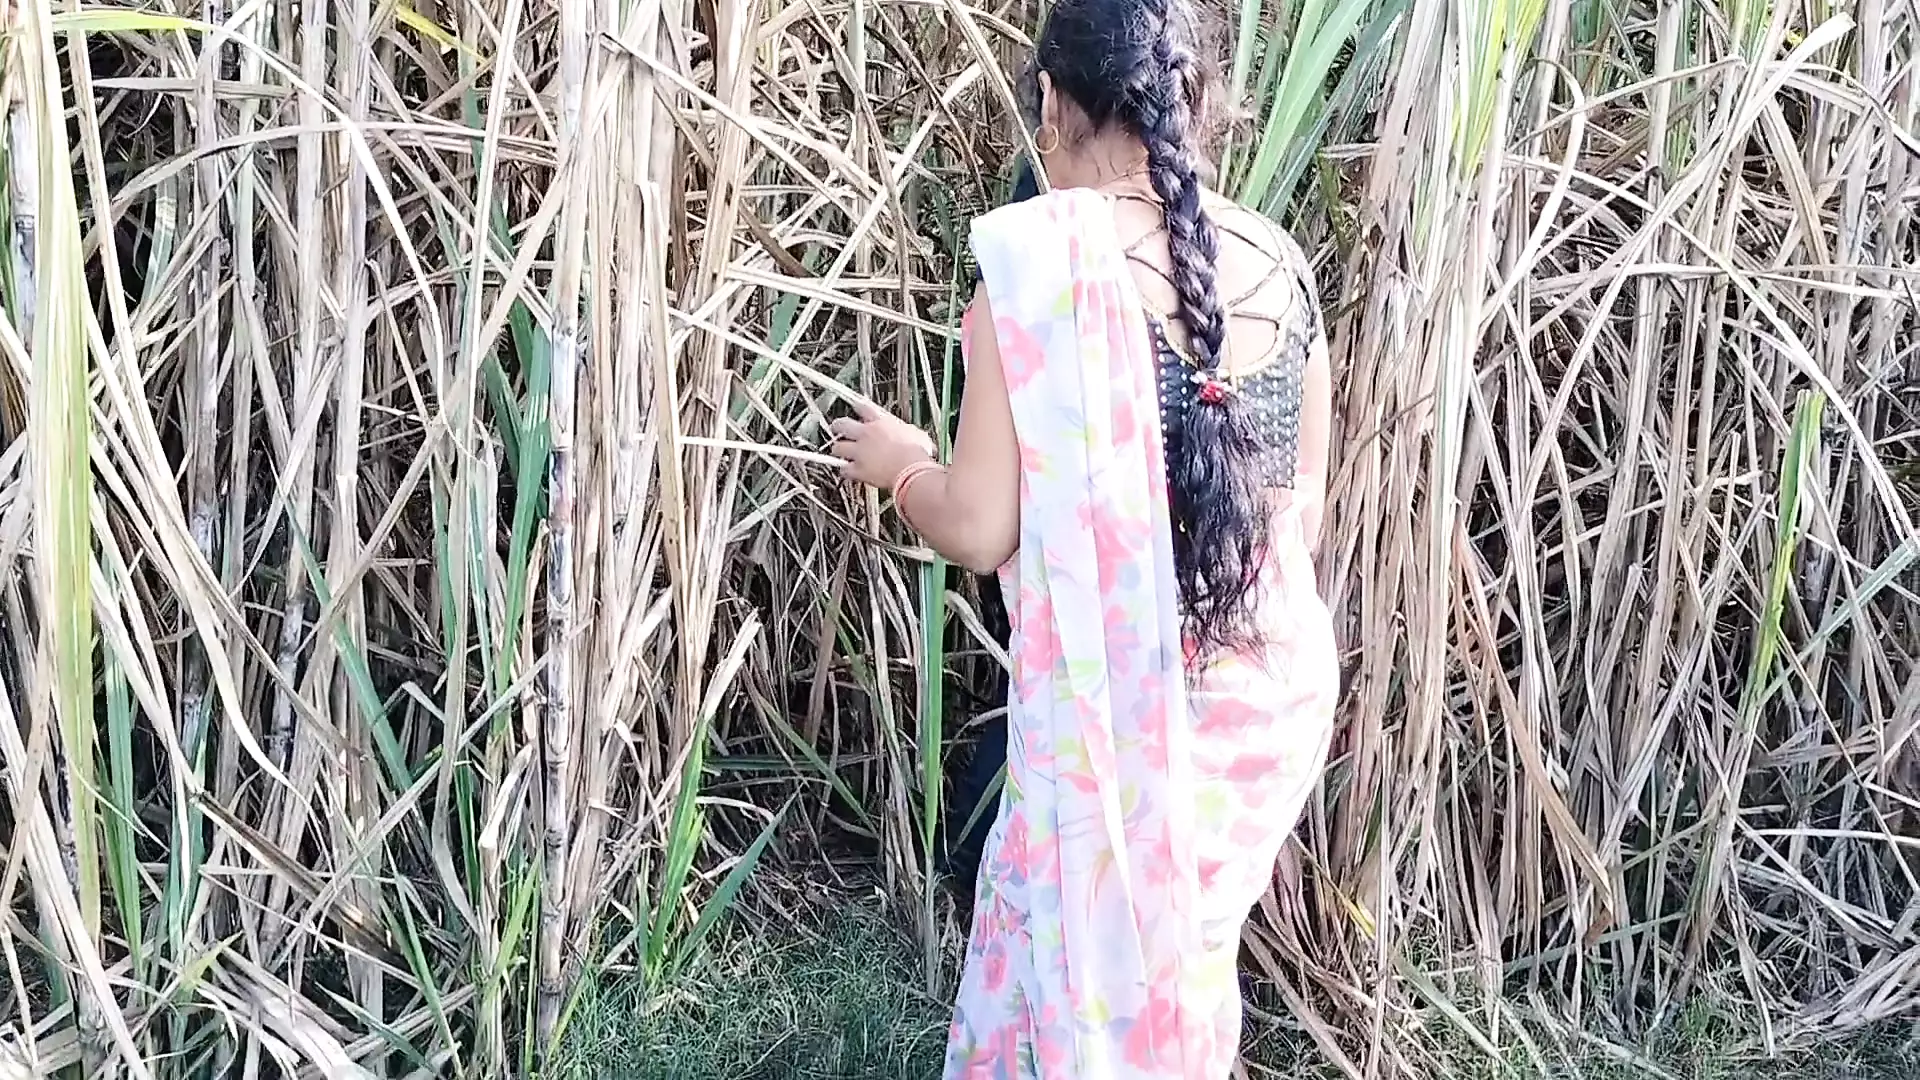 Real Bhai Behan Sex Video Jungle - Bhai bahan ne kiya Jungle Mein Mangal watch online